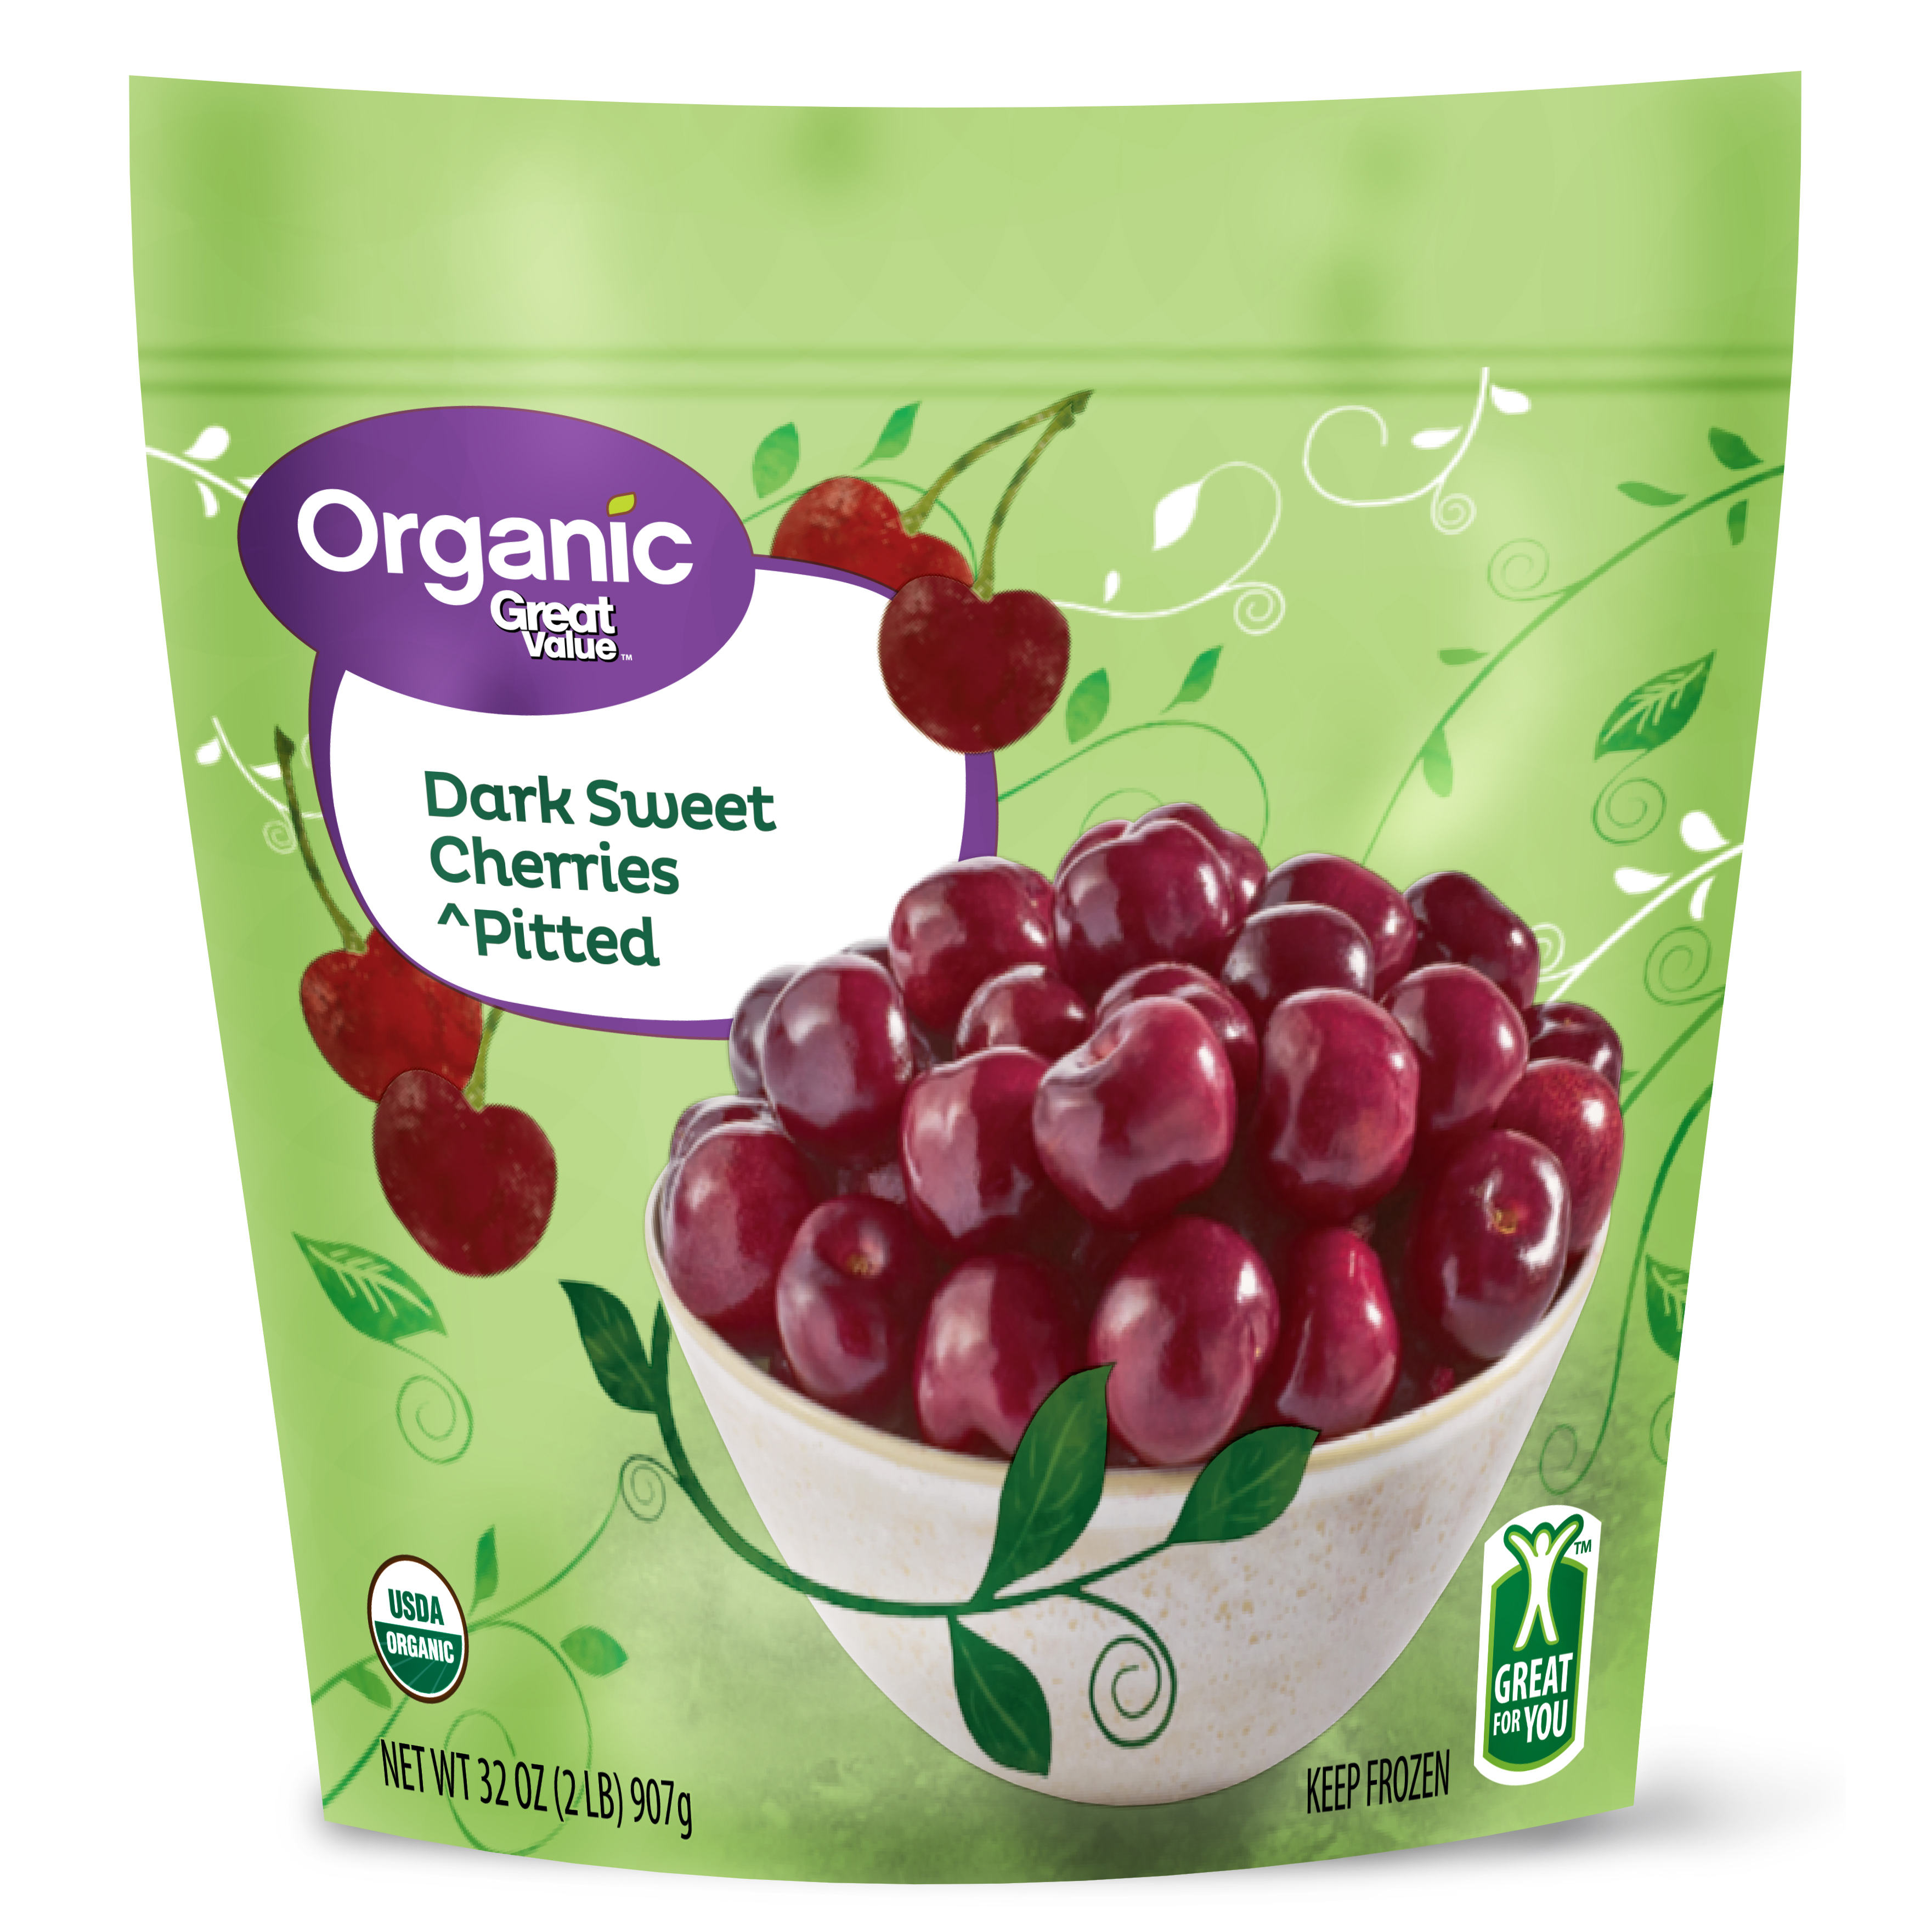 Great Value Organic Frozen Dark Sweet Cherries Pitted, 32 oz - image 1 of 9